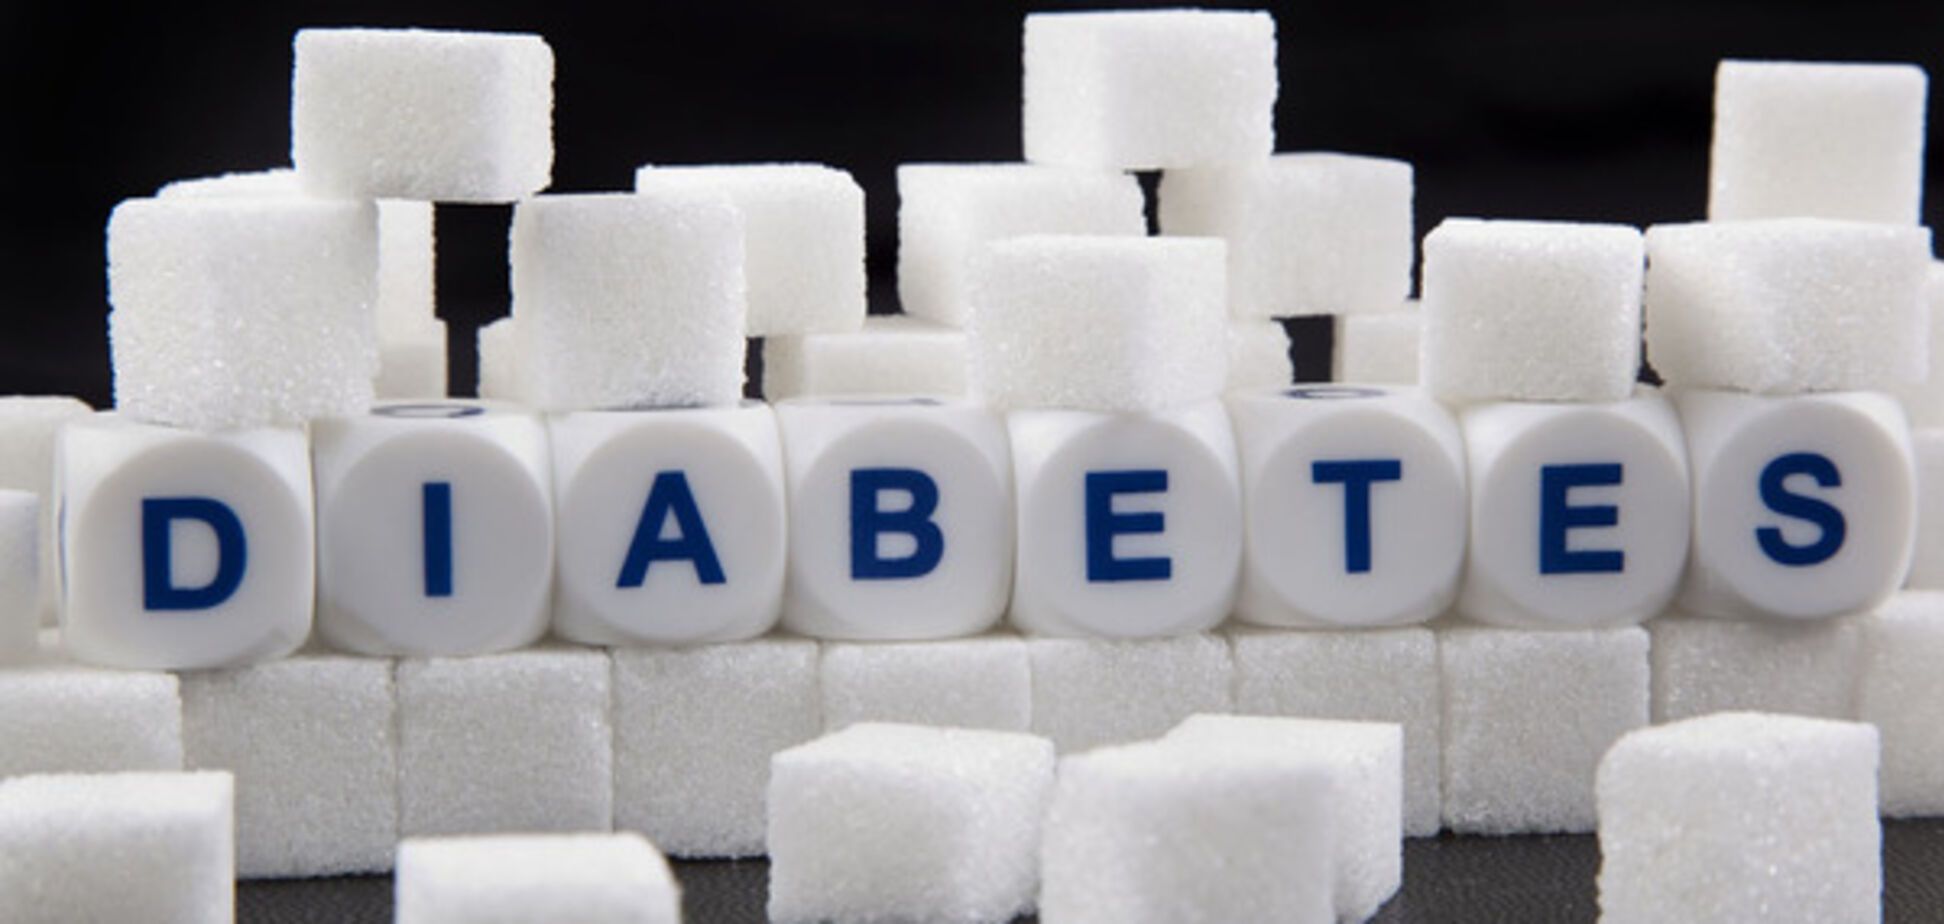 Сахарный диабет